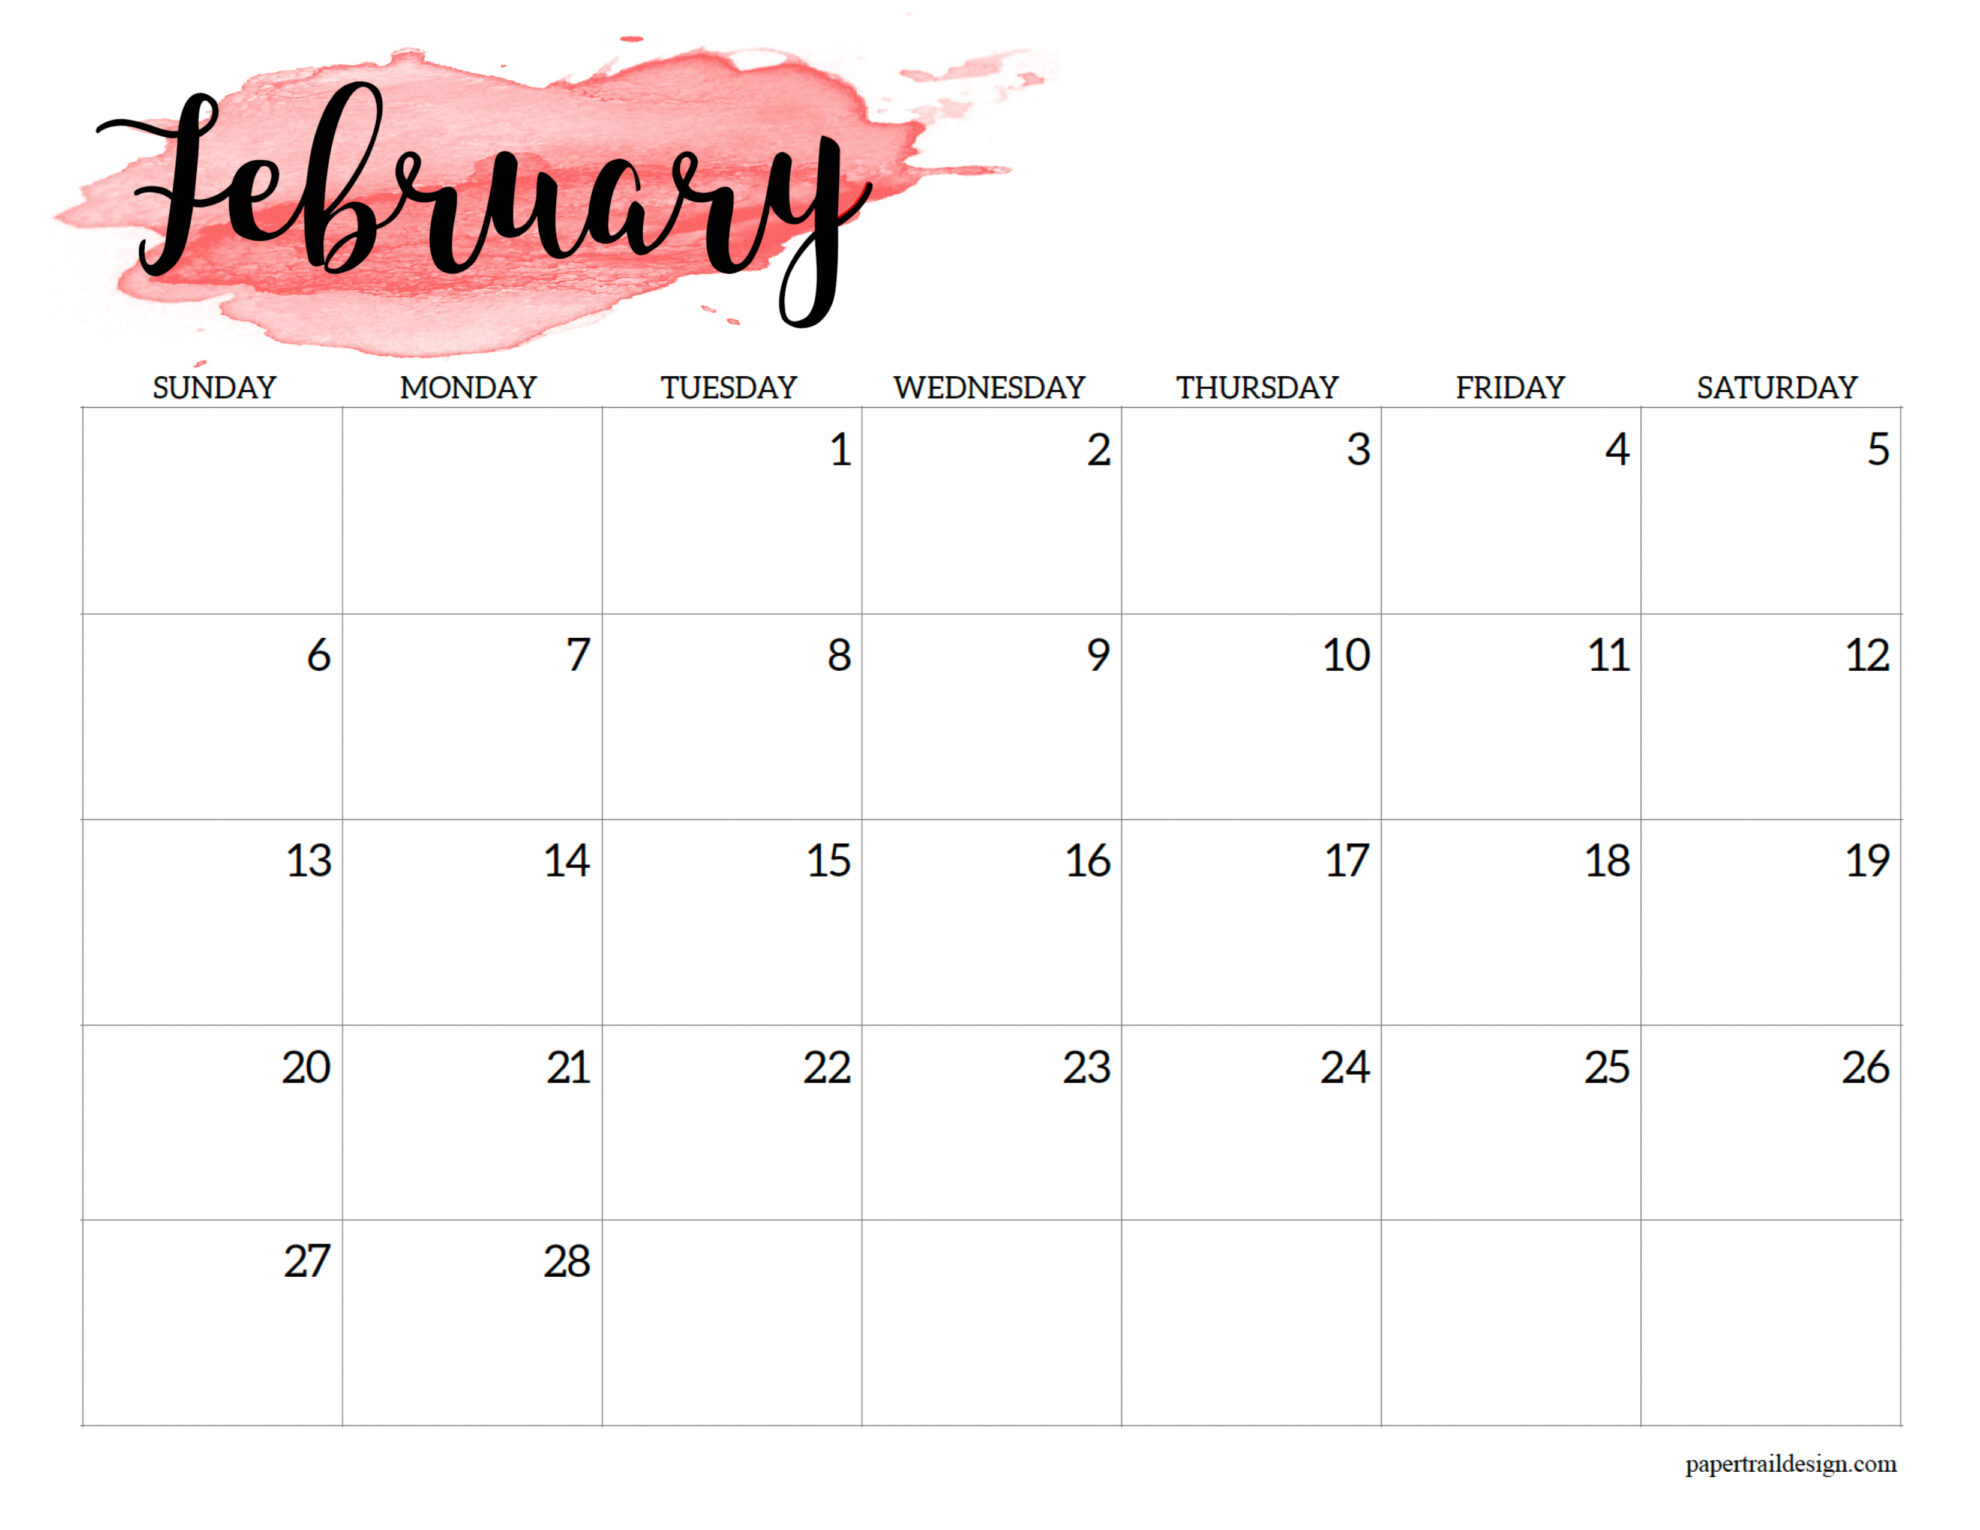 Free Printable Calendar February 2022 2022 Calendar Printable - Watercolor - Paper Trail Design